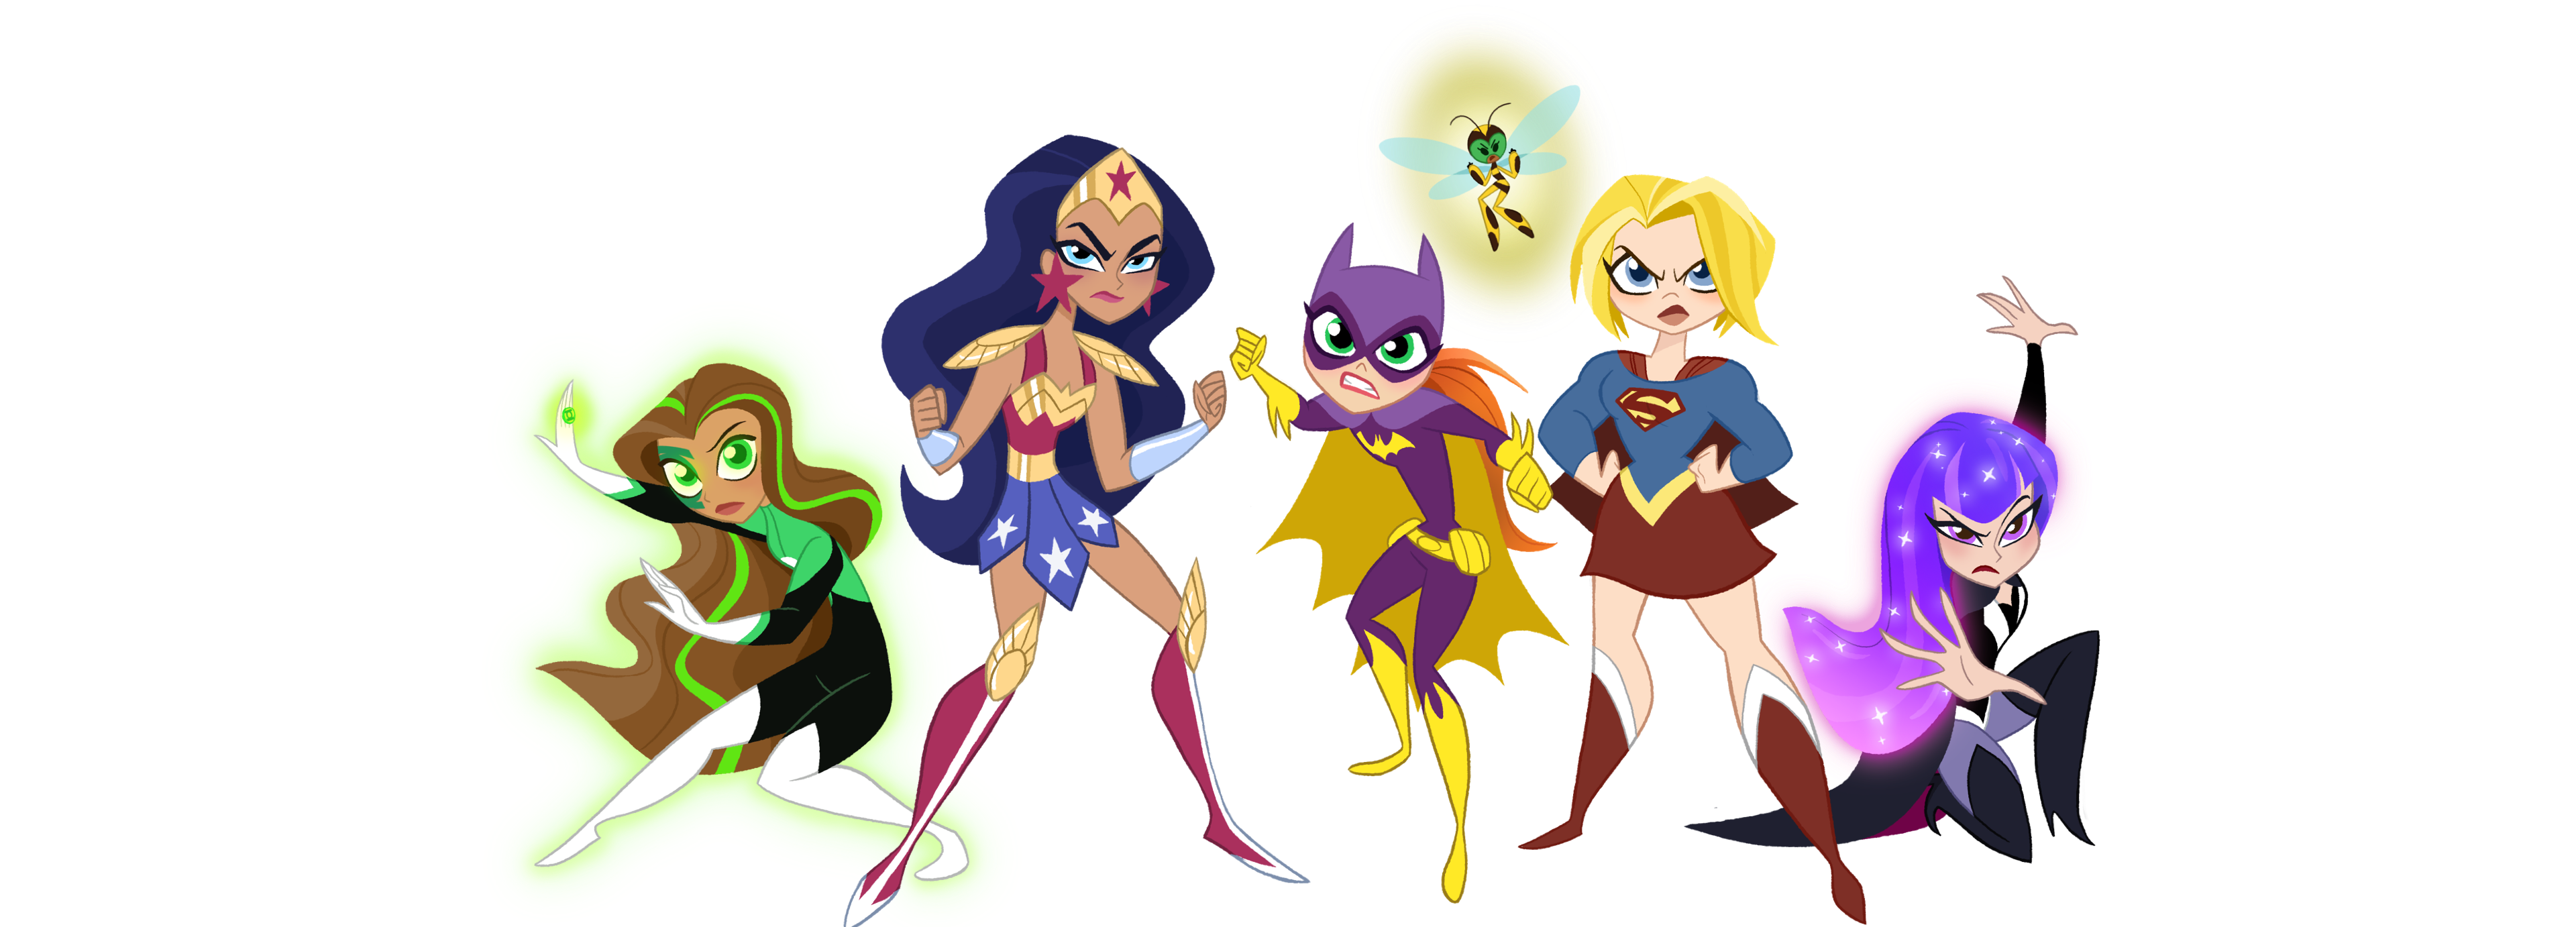 DC Super Hero Girls | Games, Videos, and Downloads | Cartoon Network